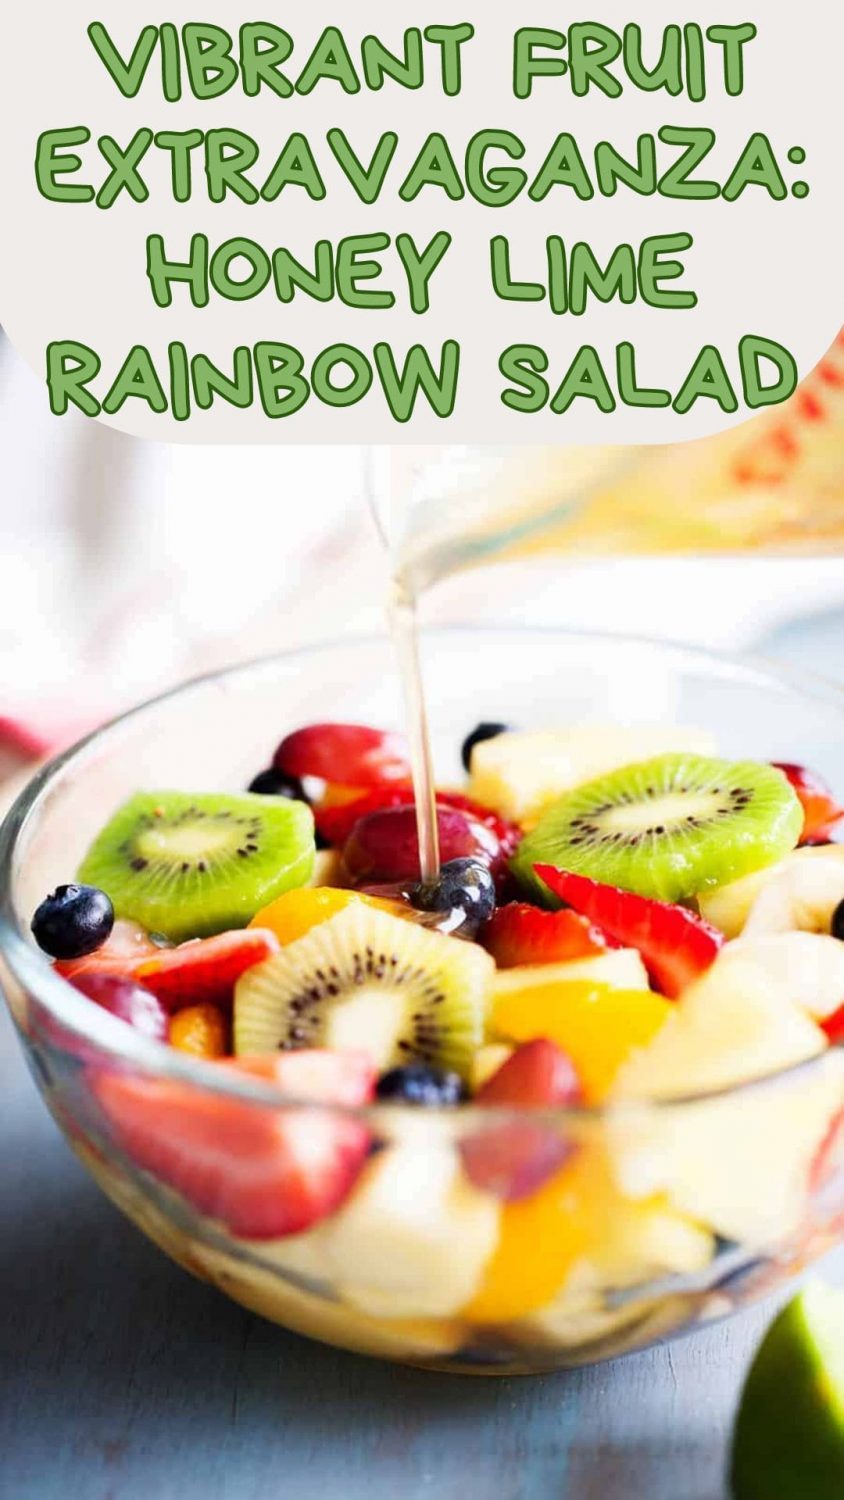 Vibrant Fruit Extravaganza: Honey Lime Rainbow Salad